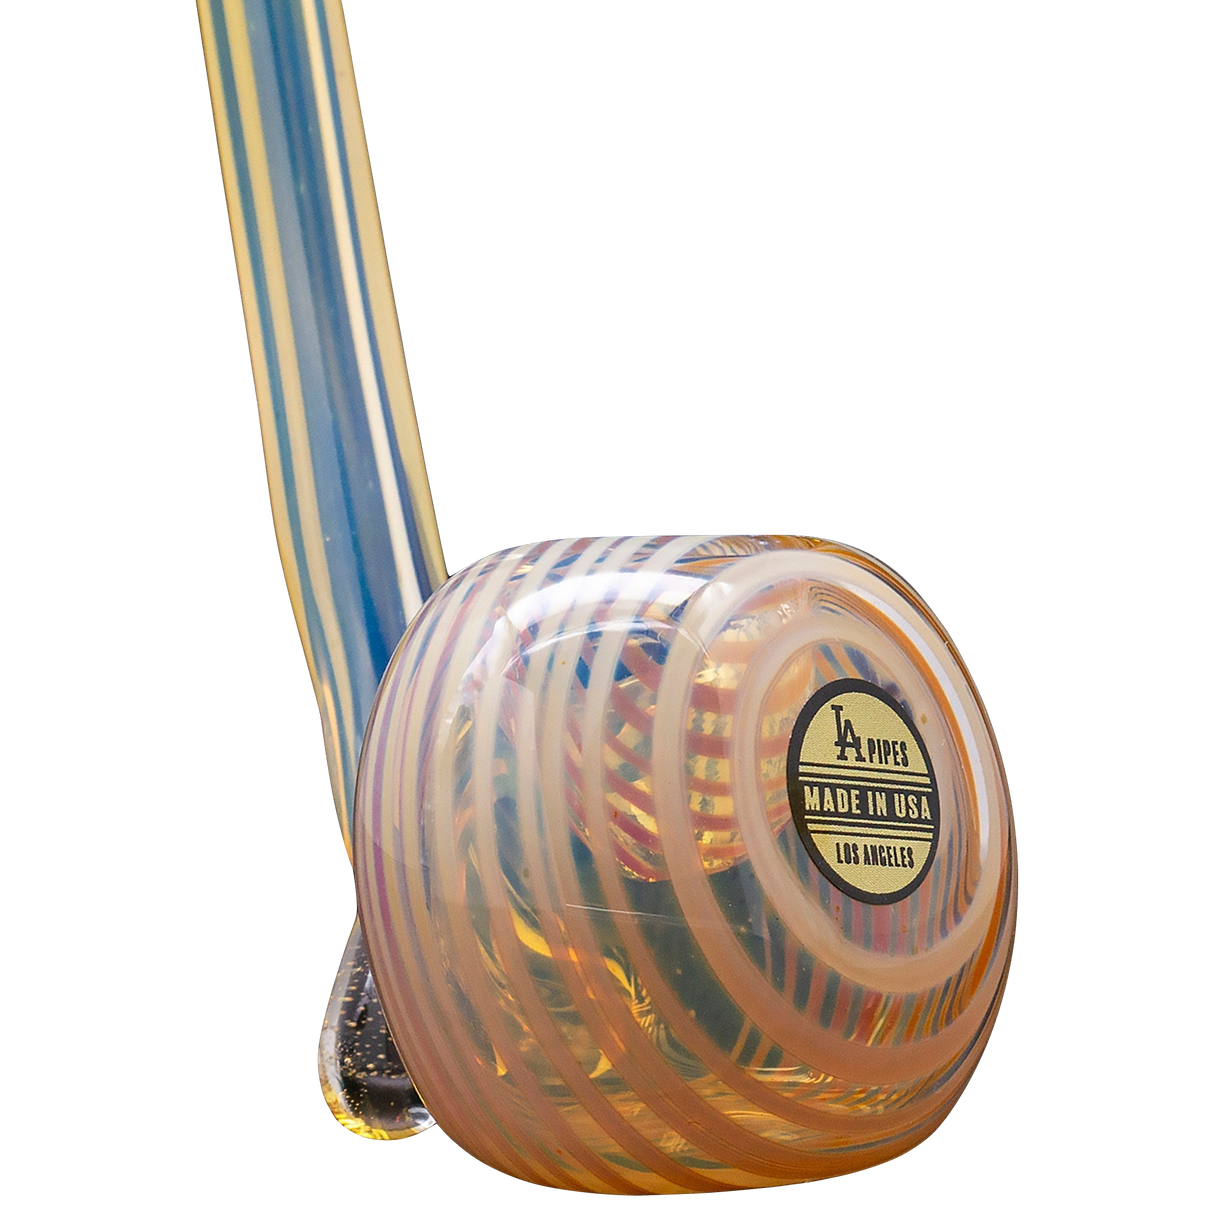 LA Pipes Spoon Hand Pipe in Borosilicate Glass with Swirl Design - Side View